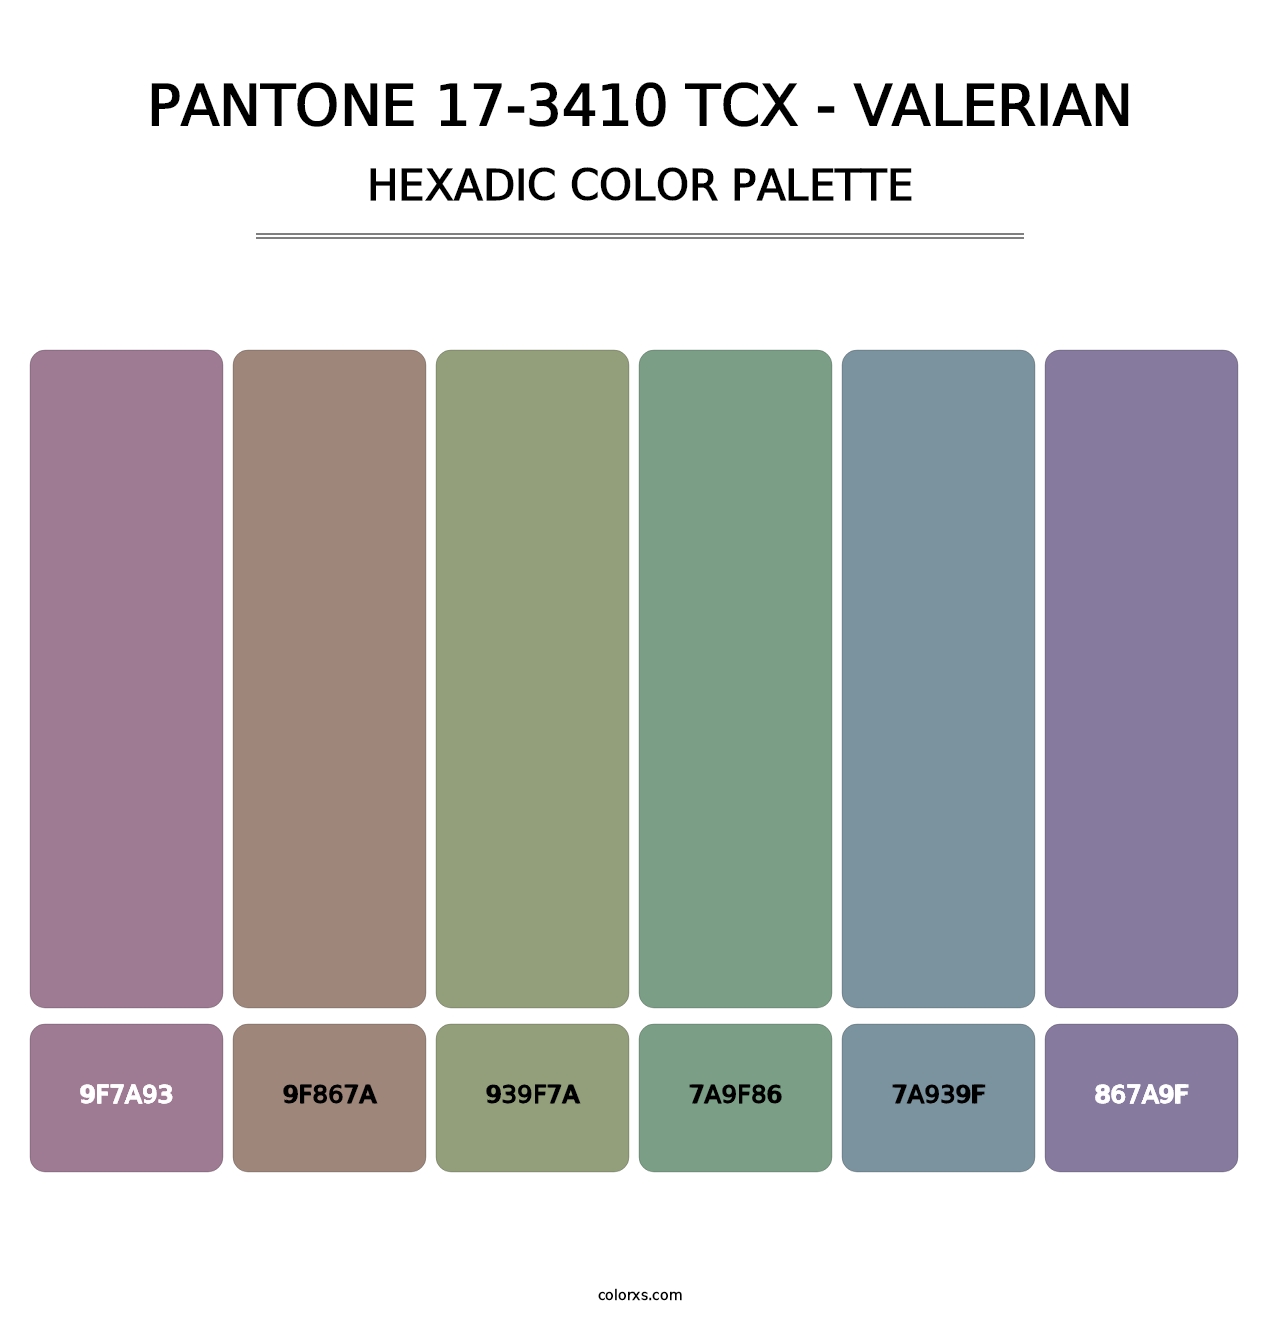 PANTONE 17-3410 TCX - Valerian - Hexadic Color Palette